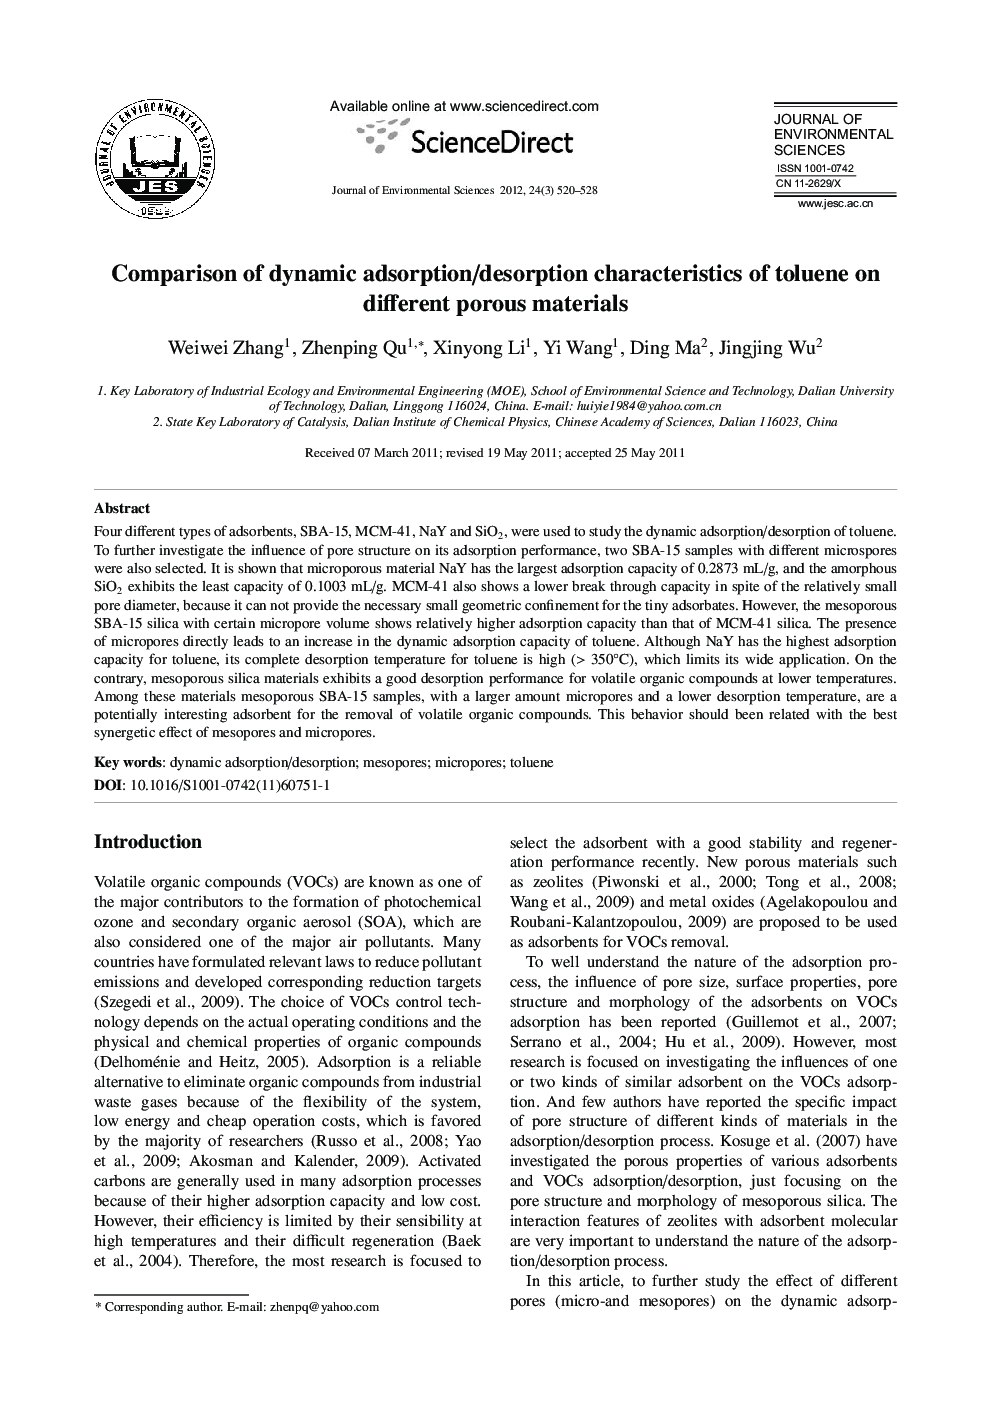 Comparison of dynamic adsorption/desorption characteristics of toluene on different porous materials